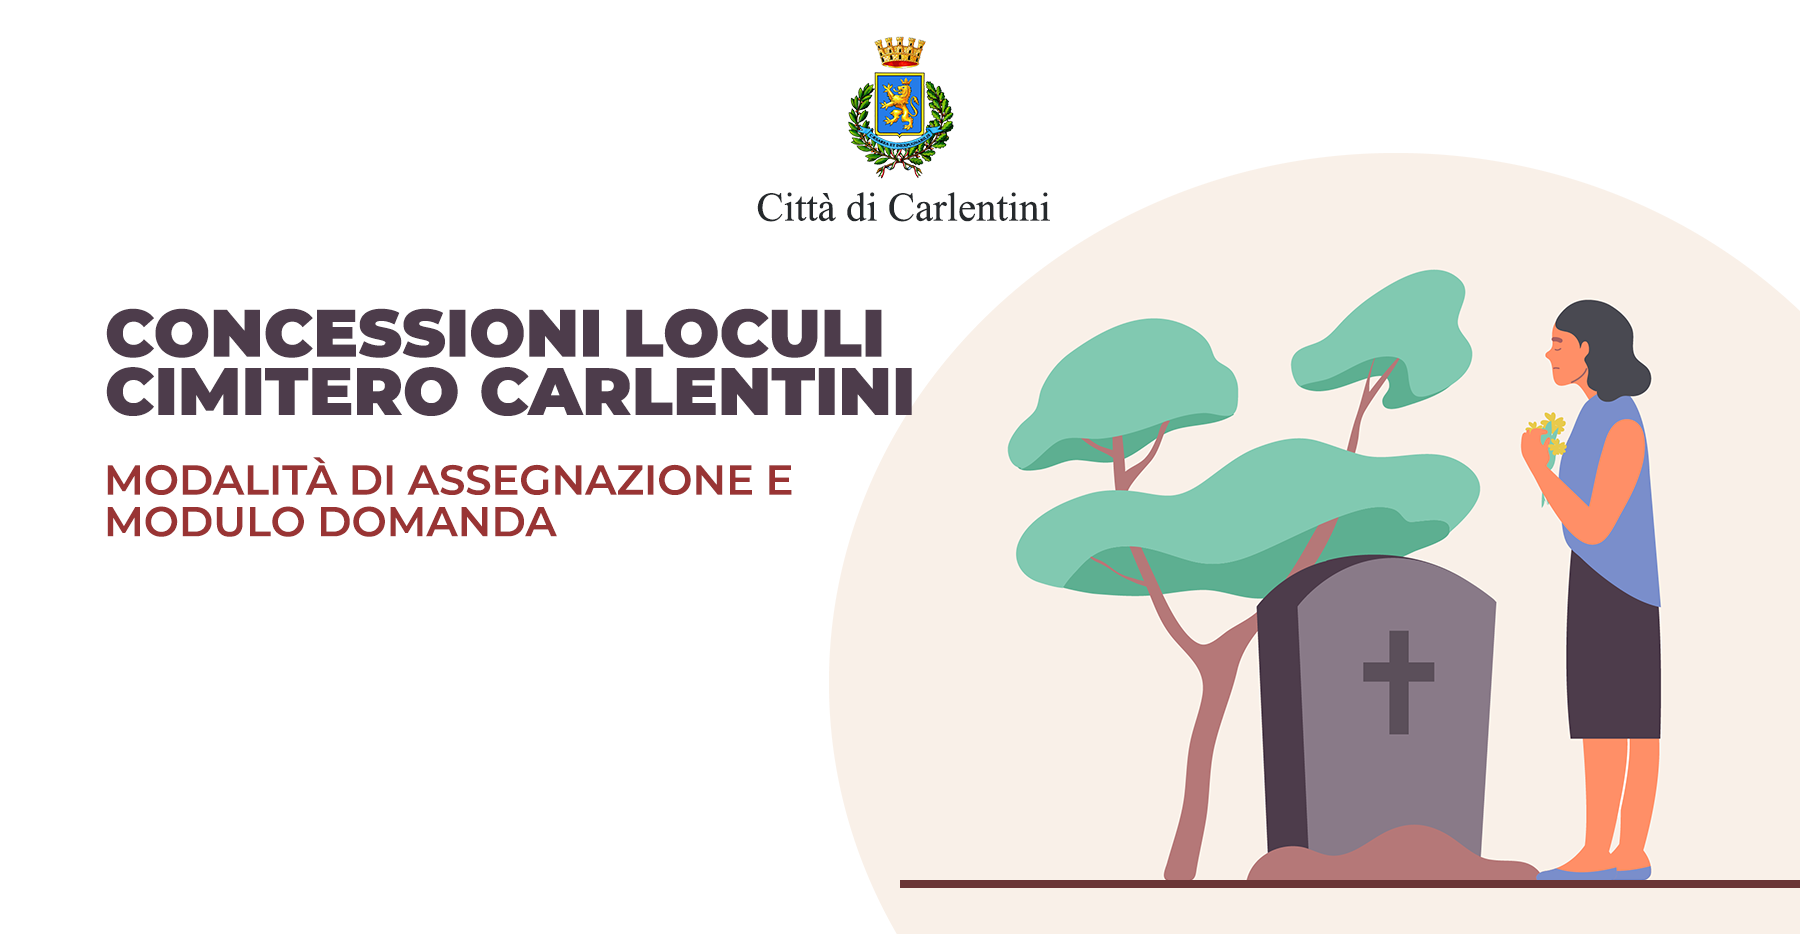 Concessioni loculi cimitero di Carlentini: istanza di concessione